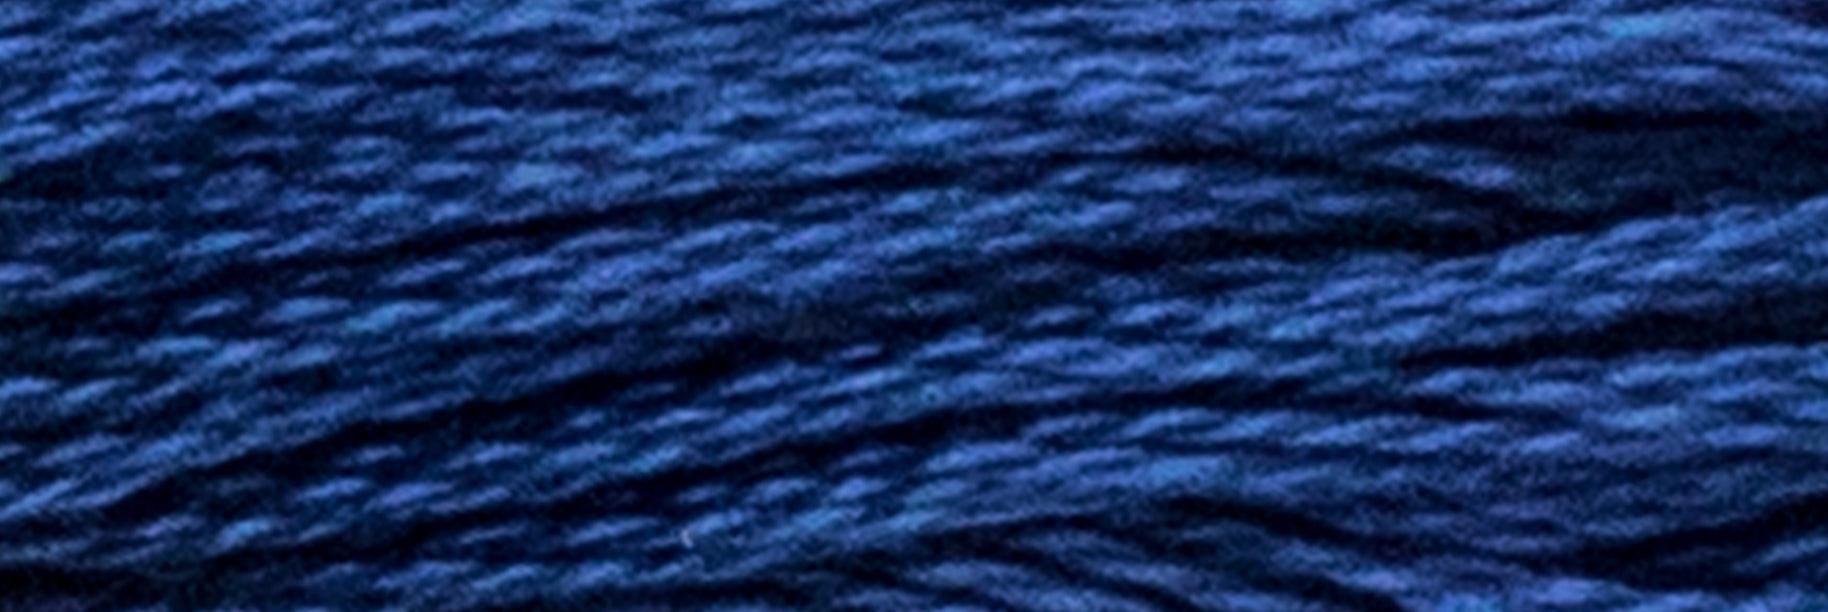 Stranded Cotton Luca-S - 179 / DMC 336 / Anchor 149 - Luca-S Stranded Cotton